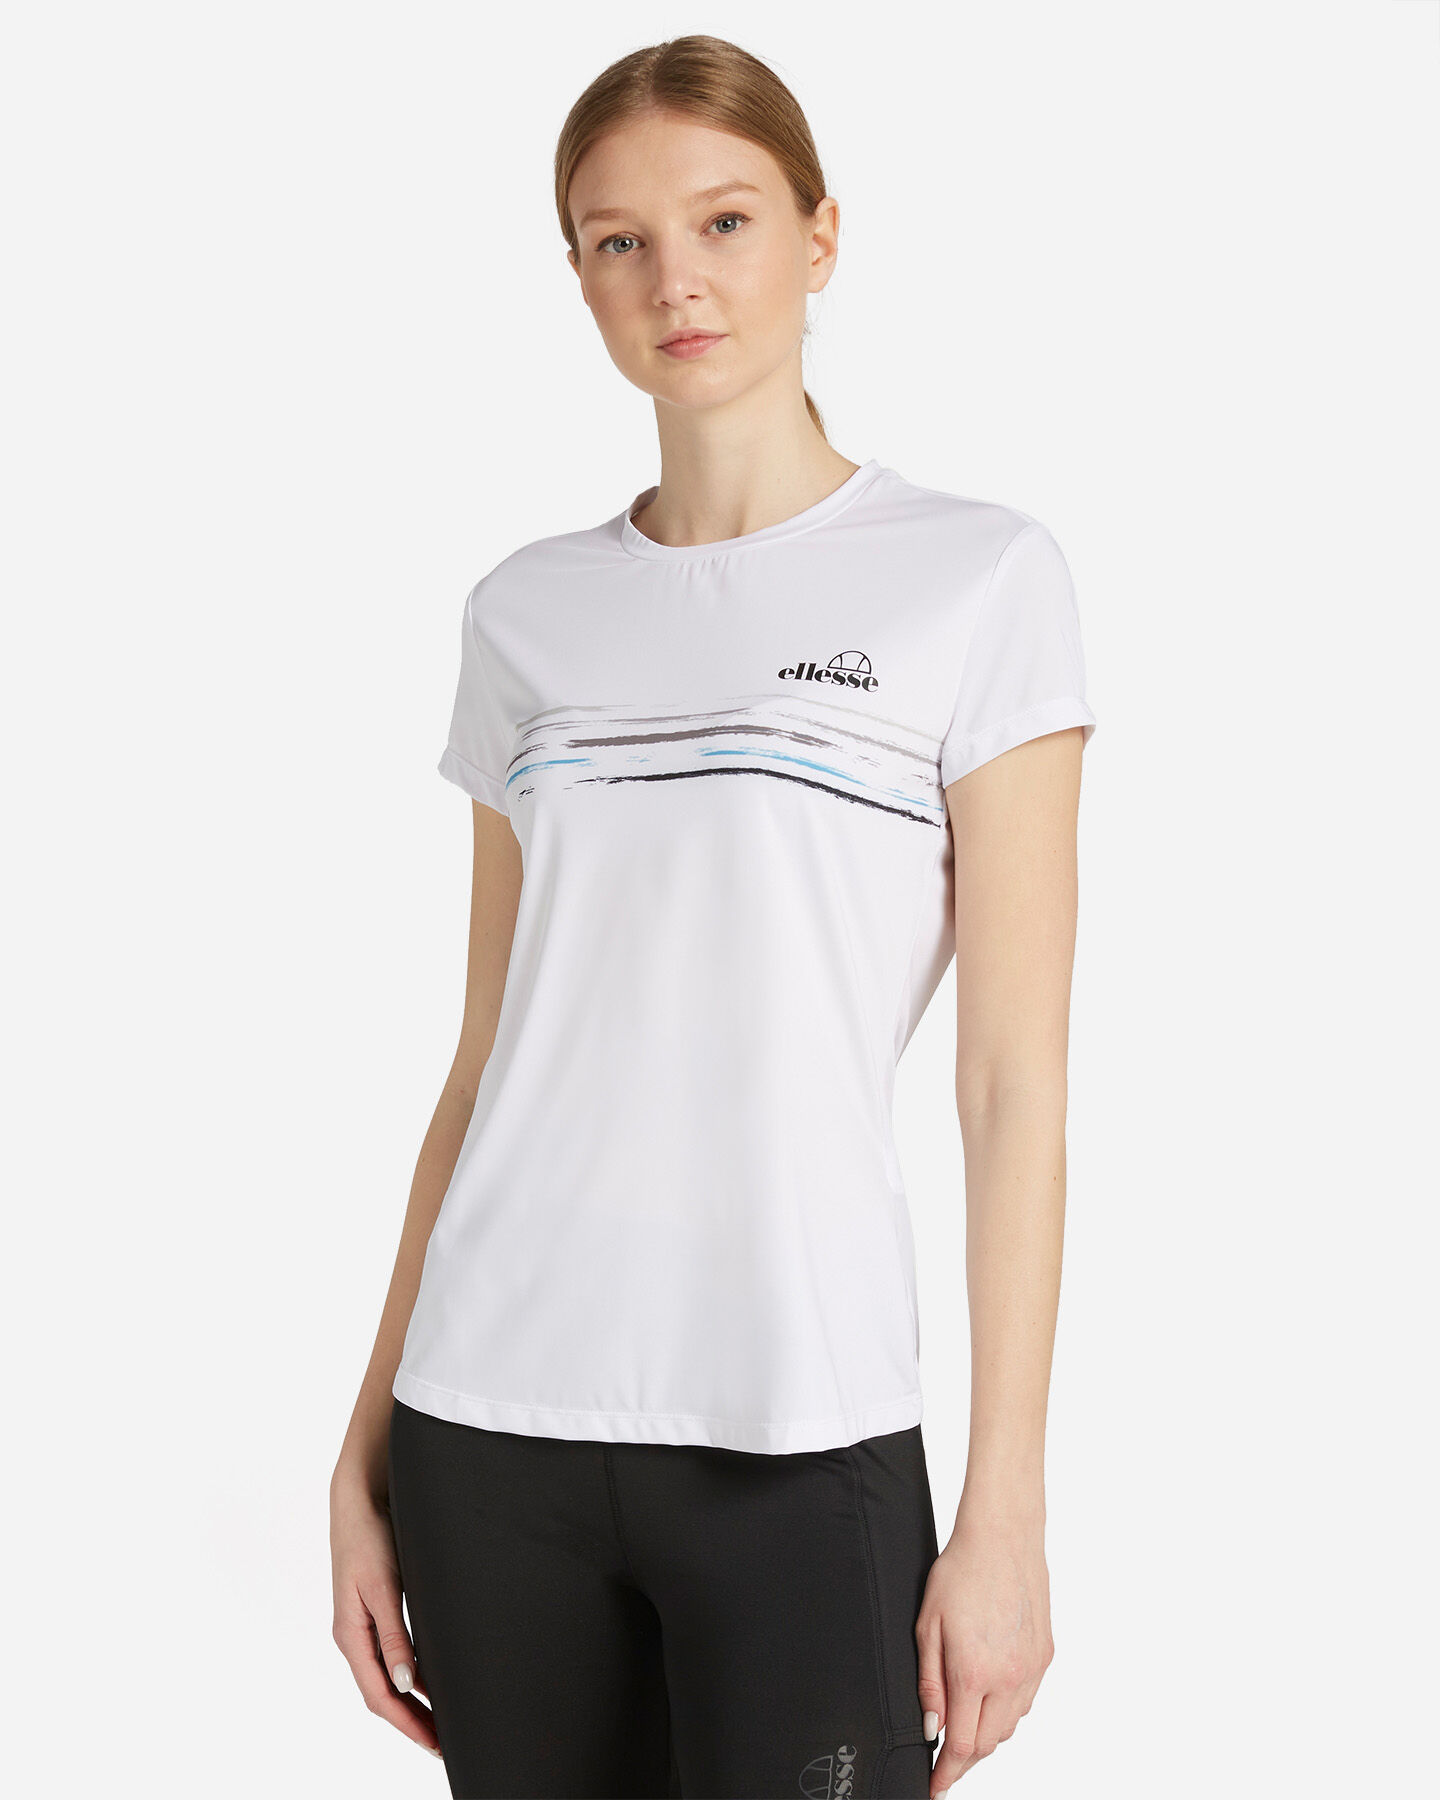  T-Shirt tennis ELLESSE FIVE STRIPES W S4117584|001|S scatto 0